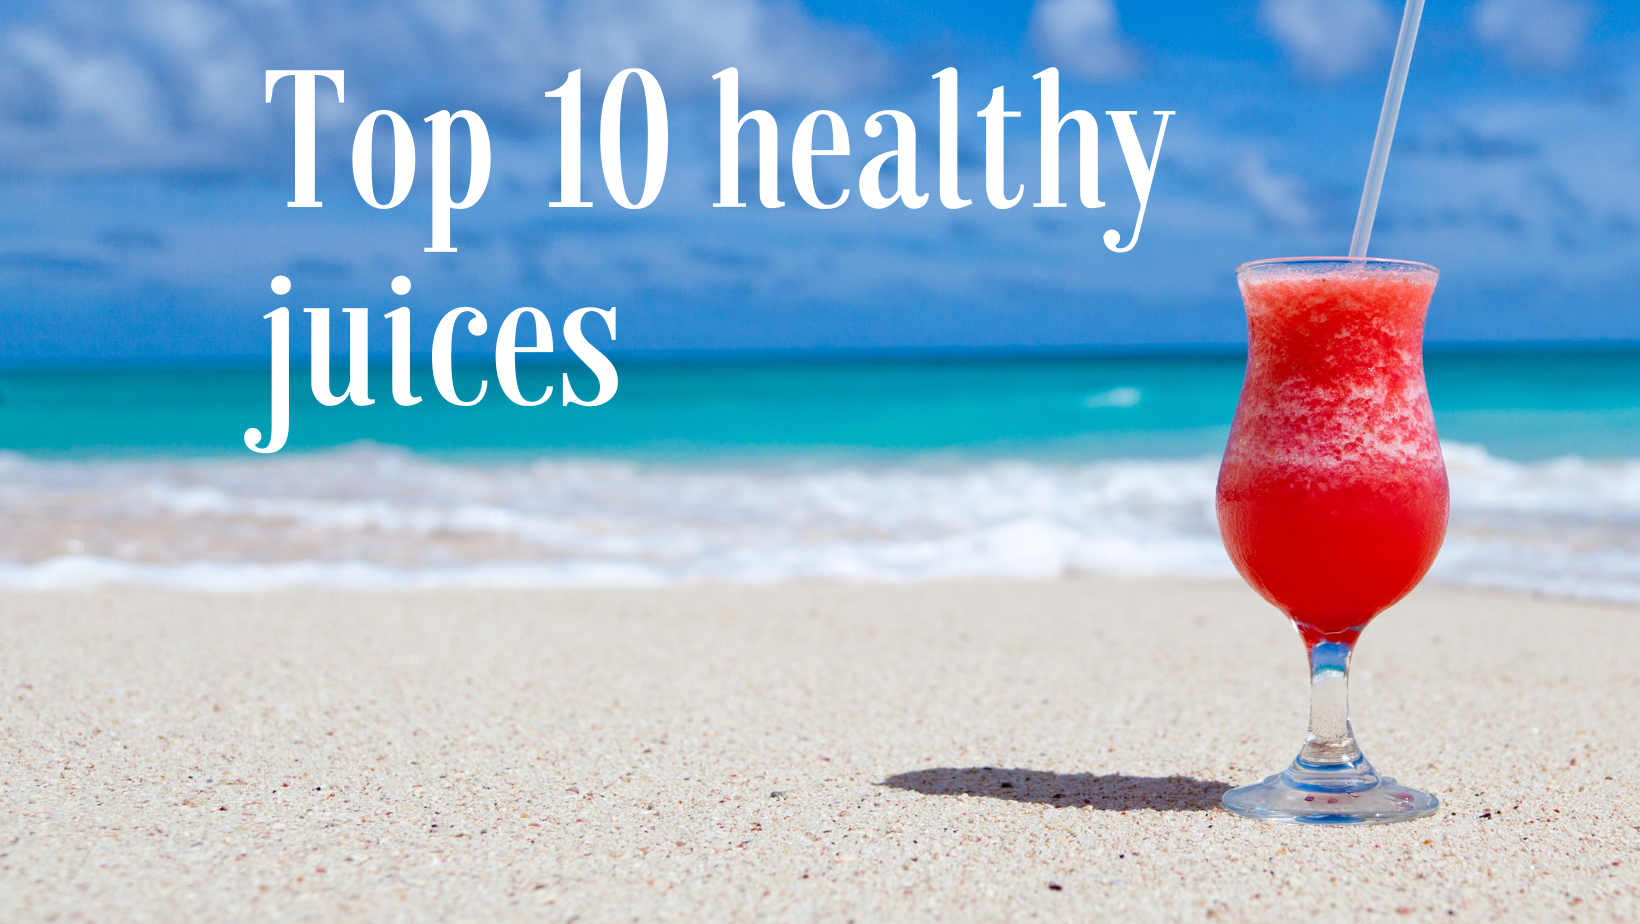 Top 10 healthy juices